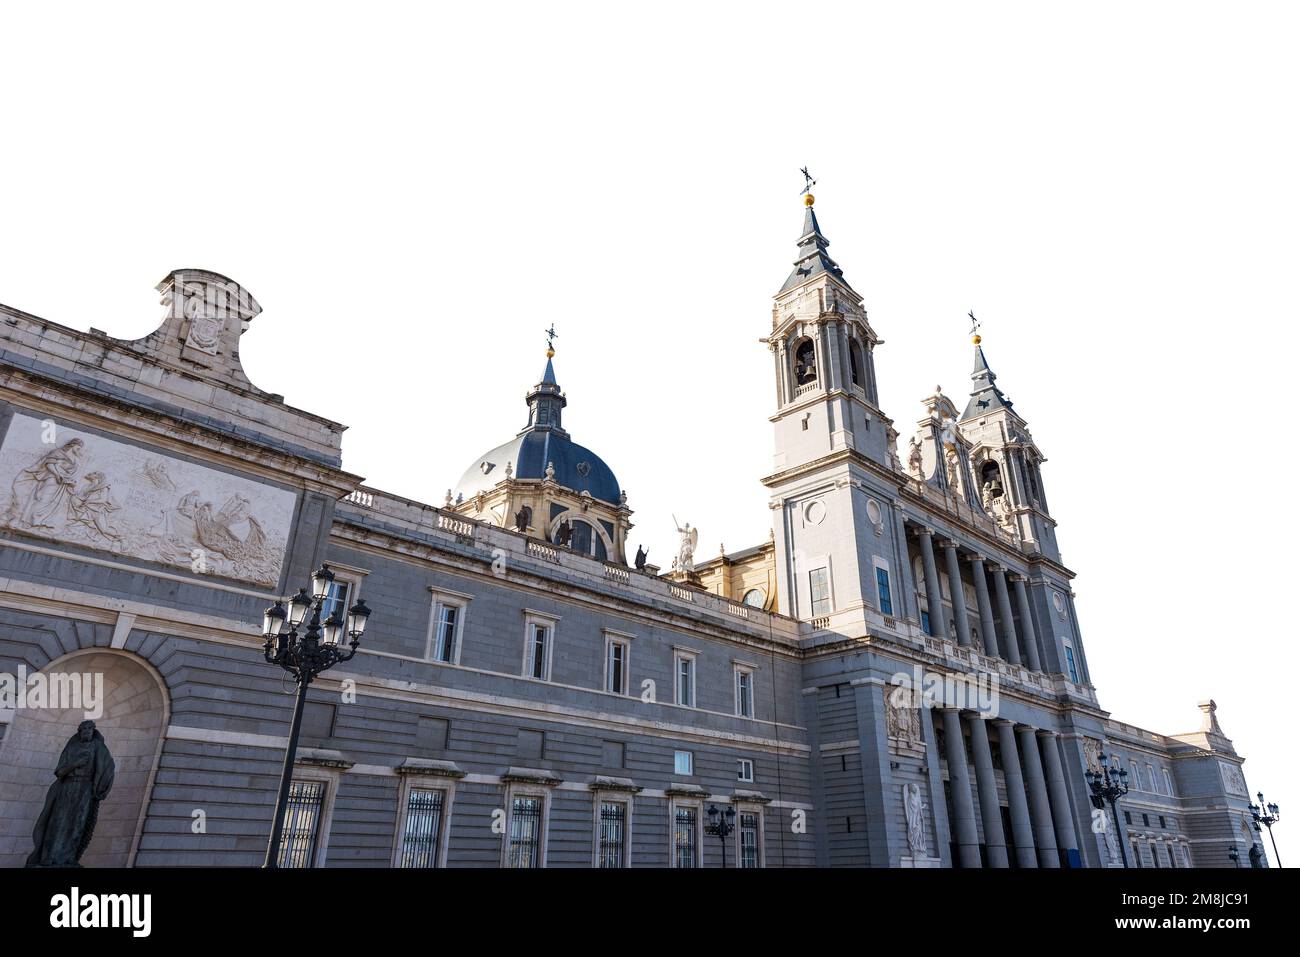 Facade of the Almudena Cathedral, isolated on white background, (Catedral de Santa Maria la Real de la Almudena) in Madrid downtown, Spain, Europe. Stock Photo